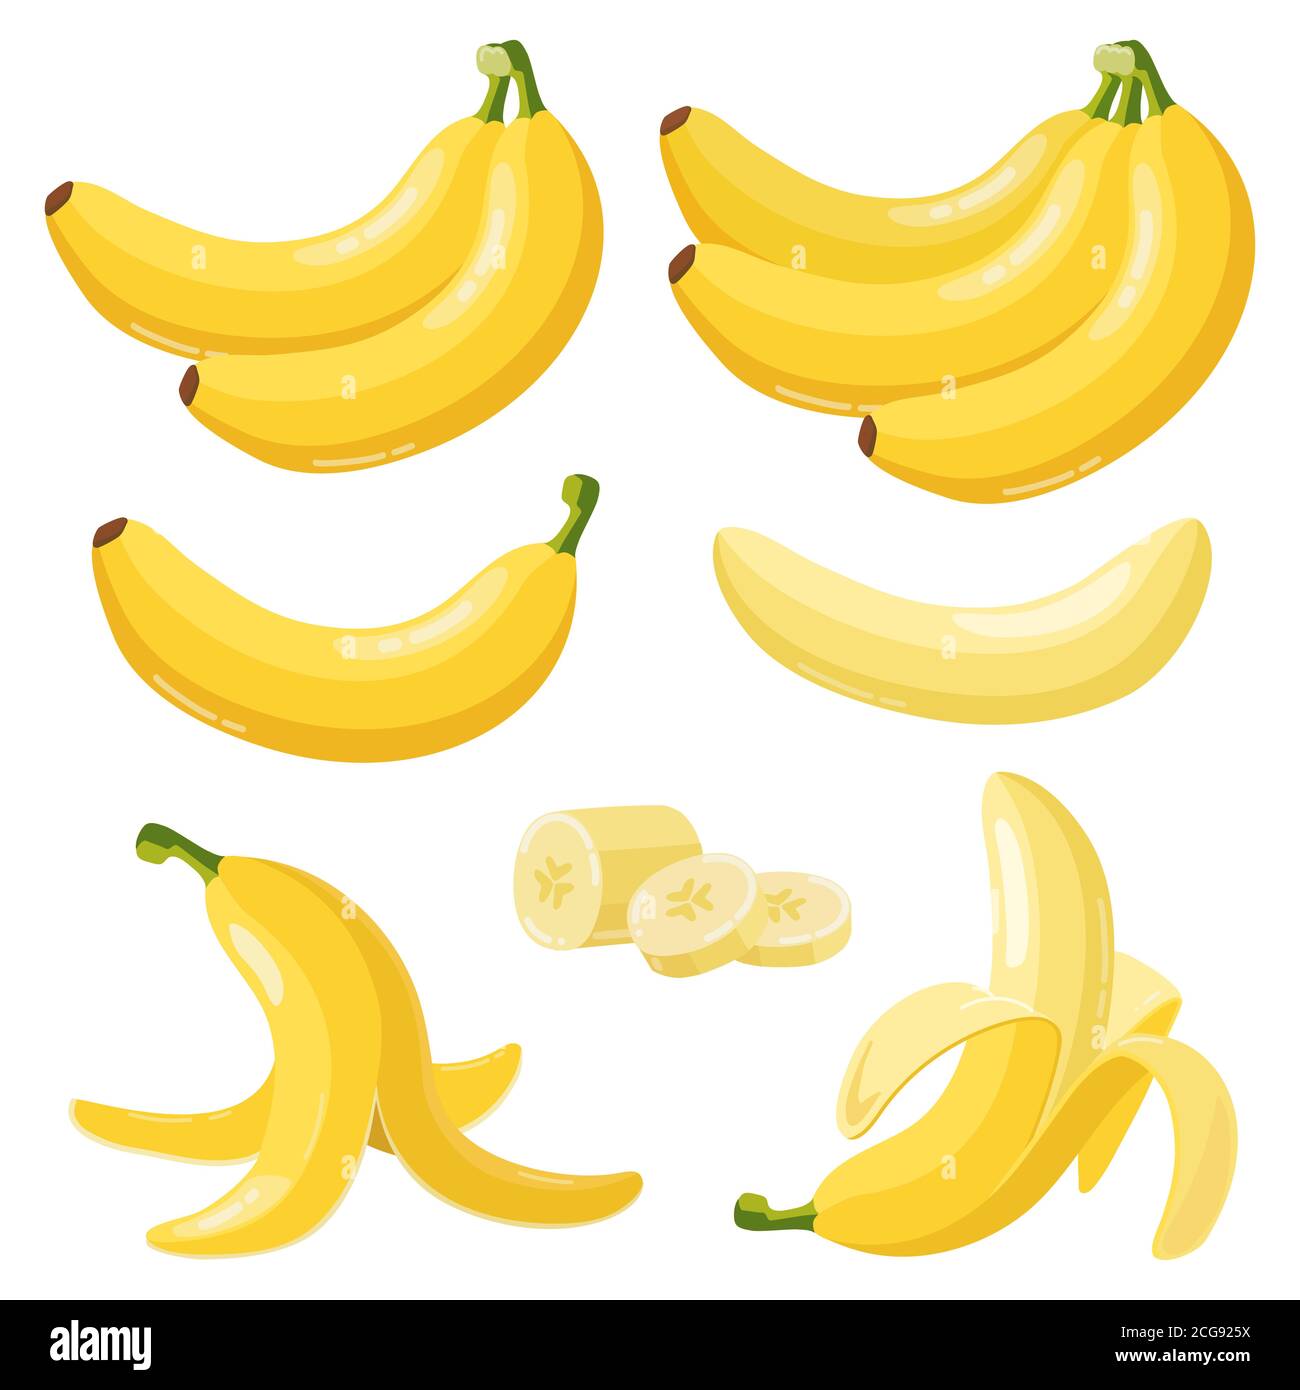 https://c8.alamy.com/comp/2CG925X/cartoon-bananas-tropical-yellow-fruit-peeled-banana-and-bunch-of-ripe-bananas-vegetarian-fresh-fruits-isolated-vector-illustration-icons-set-2CG925X.jpg